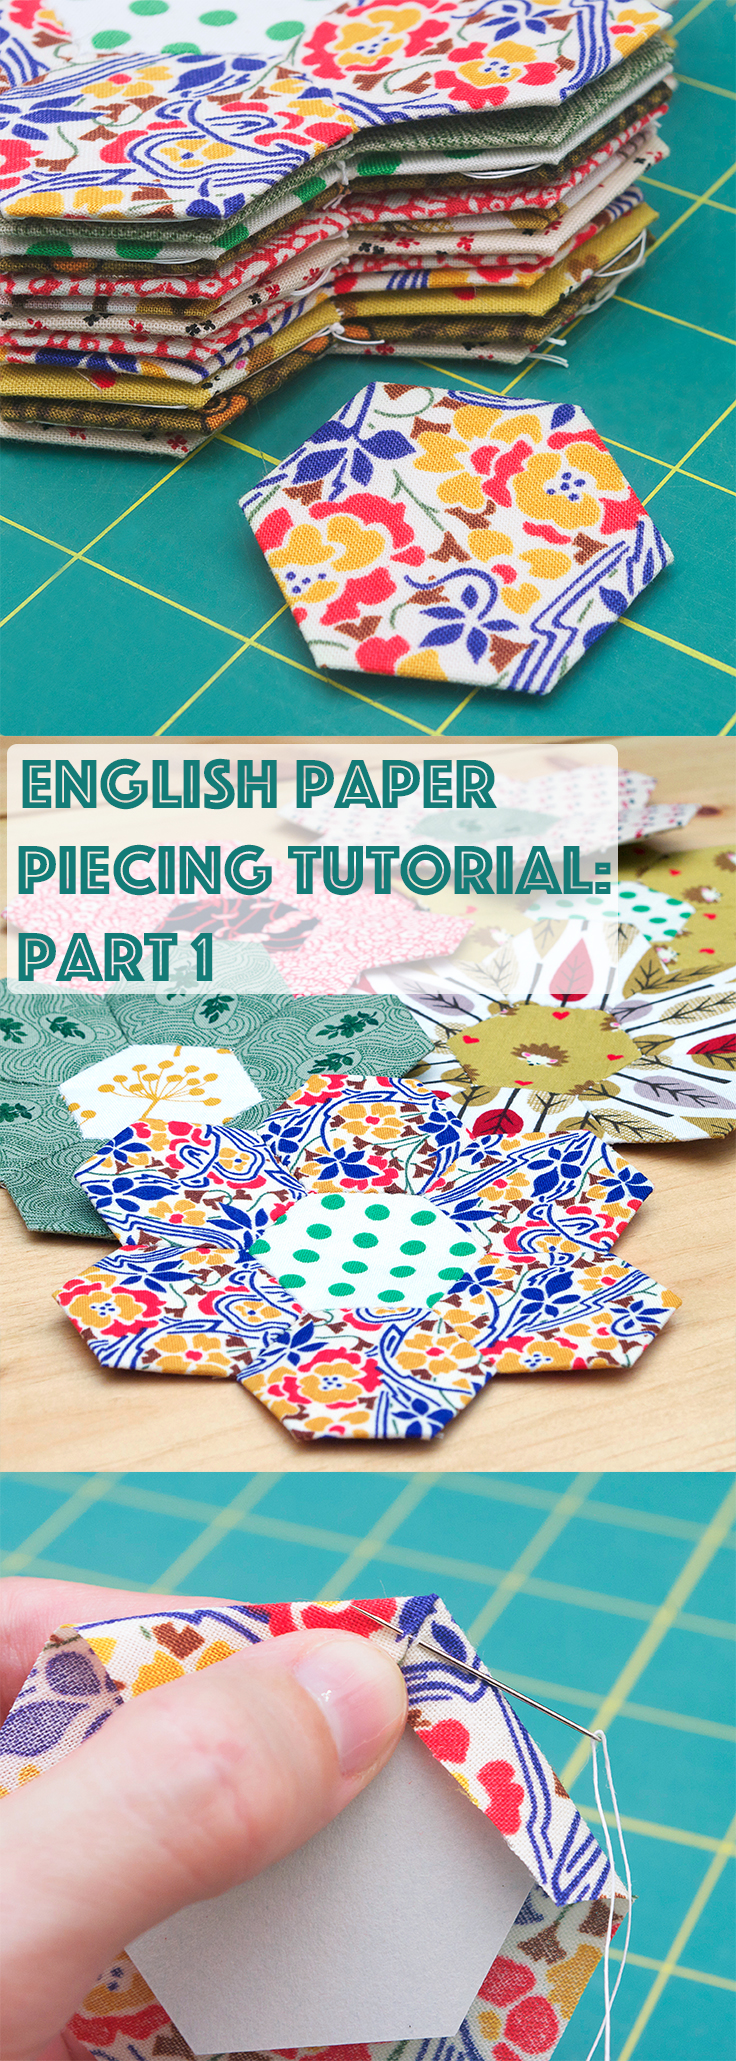 English Paper Piecing Tutorial Series